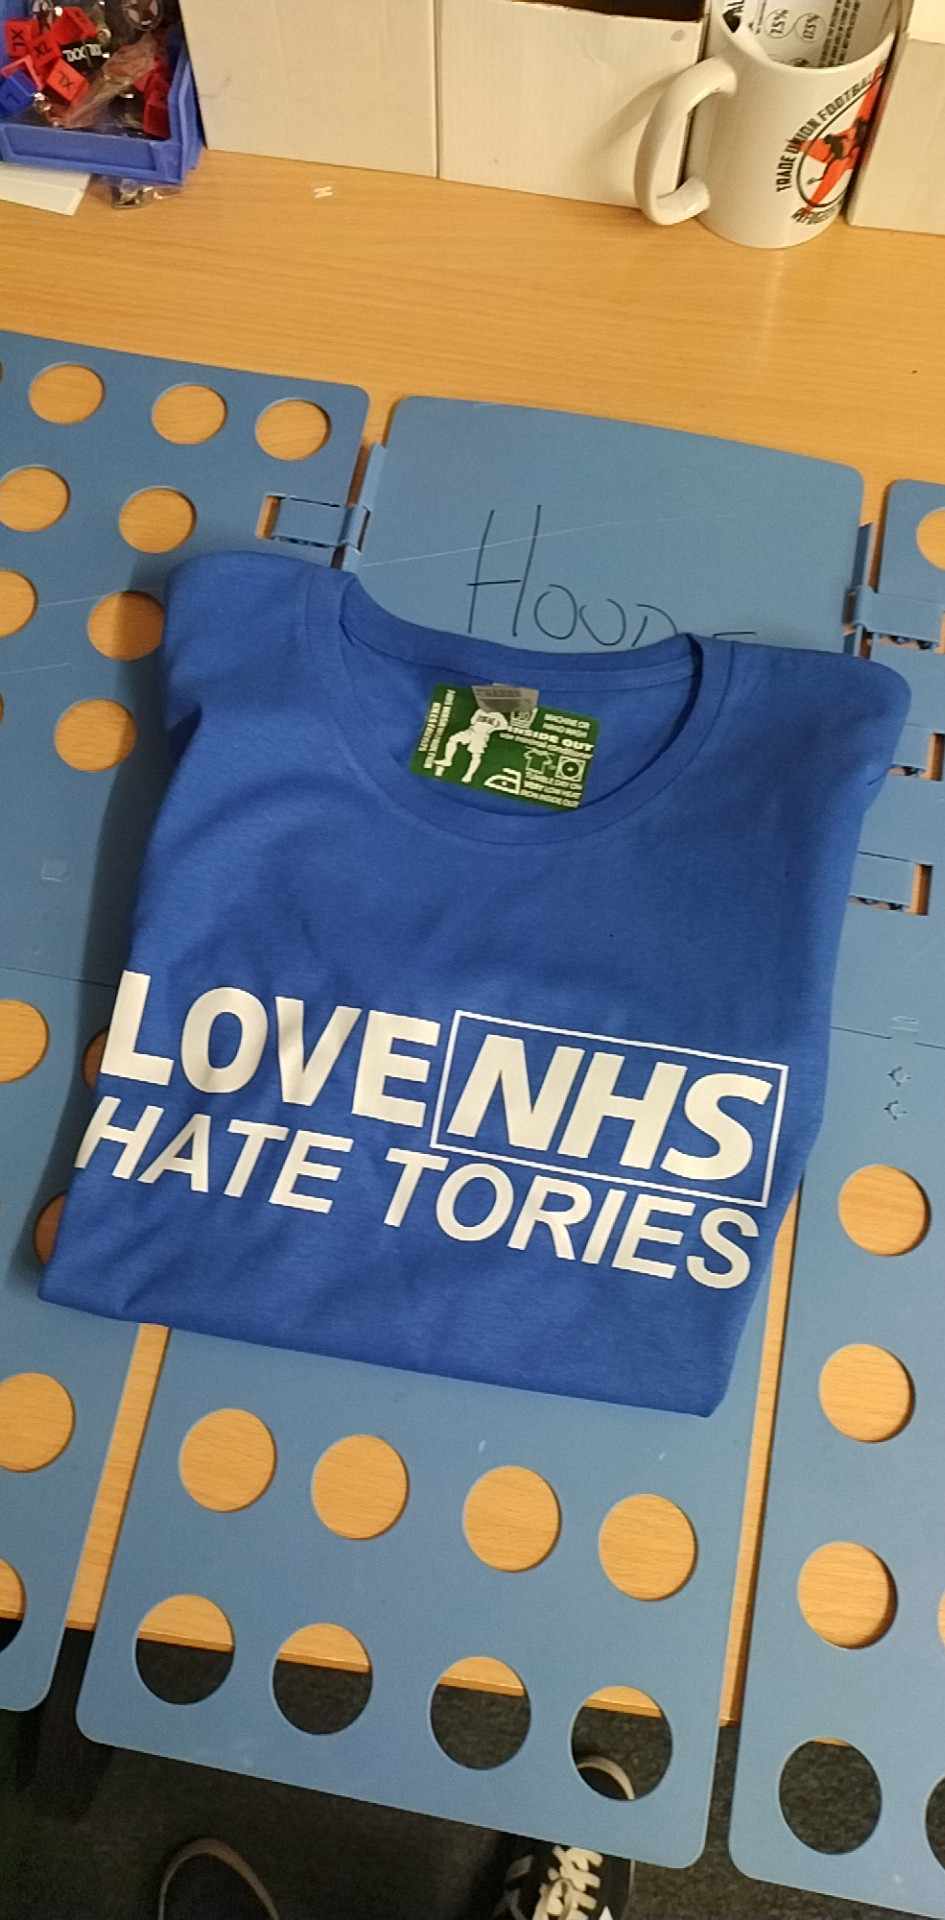 Love NHS Hate Tories T-shirt